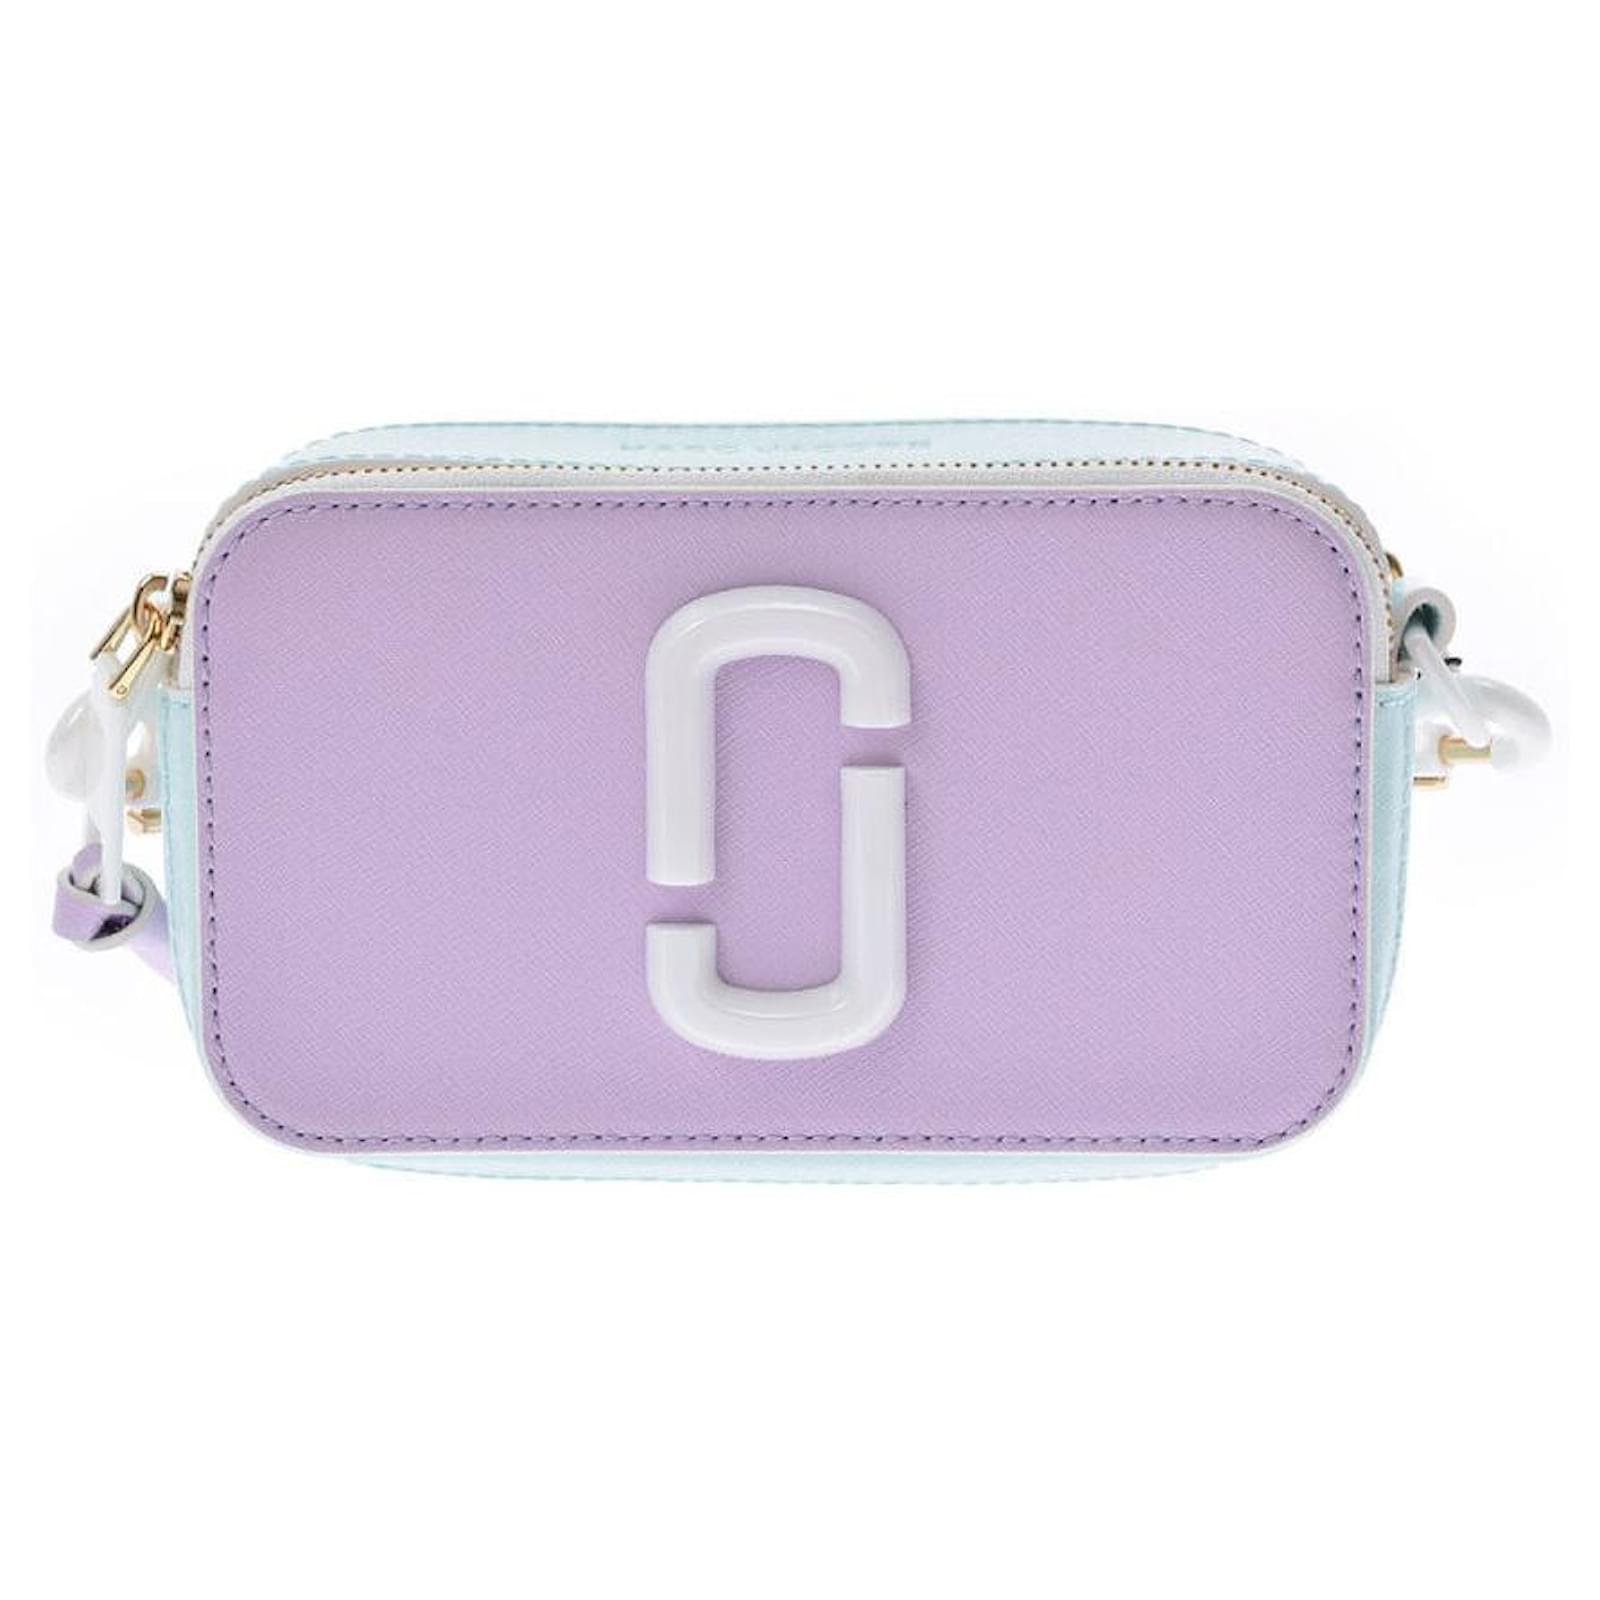 Marc Jacobs Snapshot Bag Bags In Pink & Purple